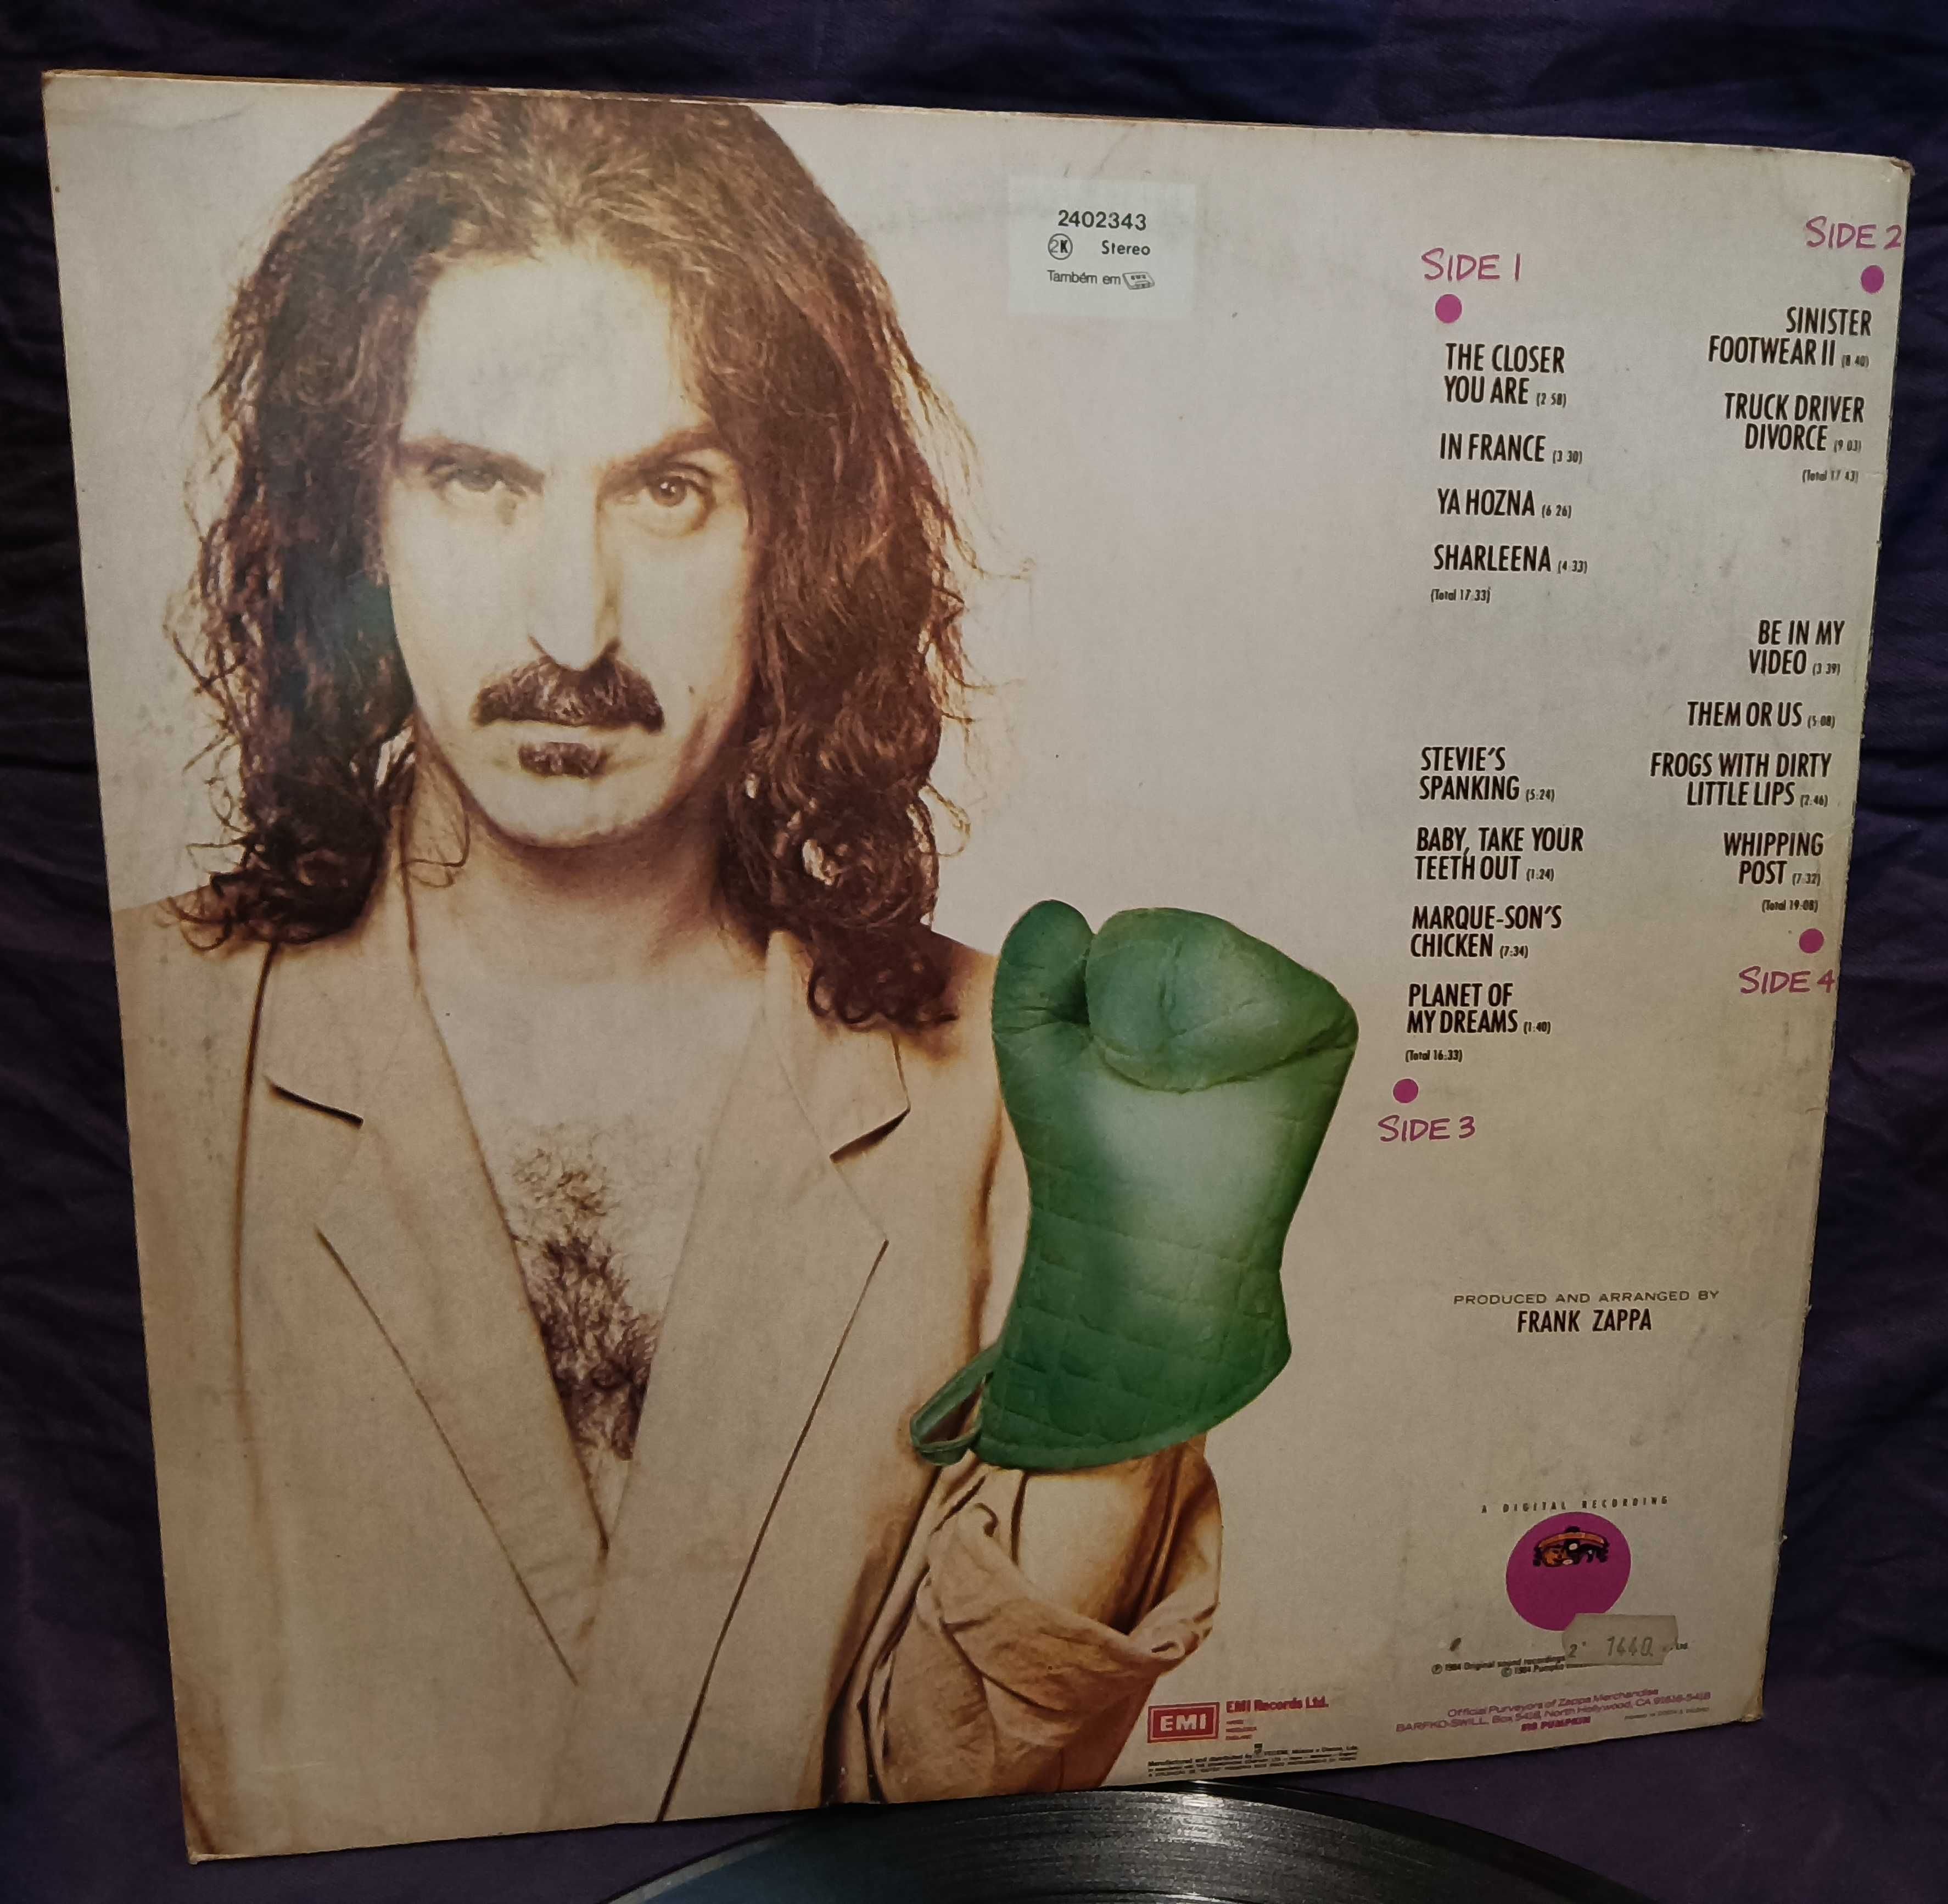 Gillan e Zappa 2 LPs duplos em vinil